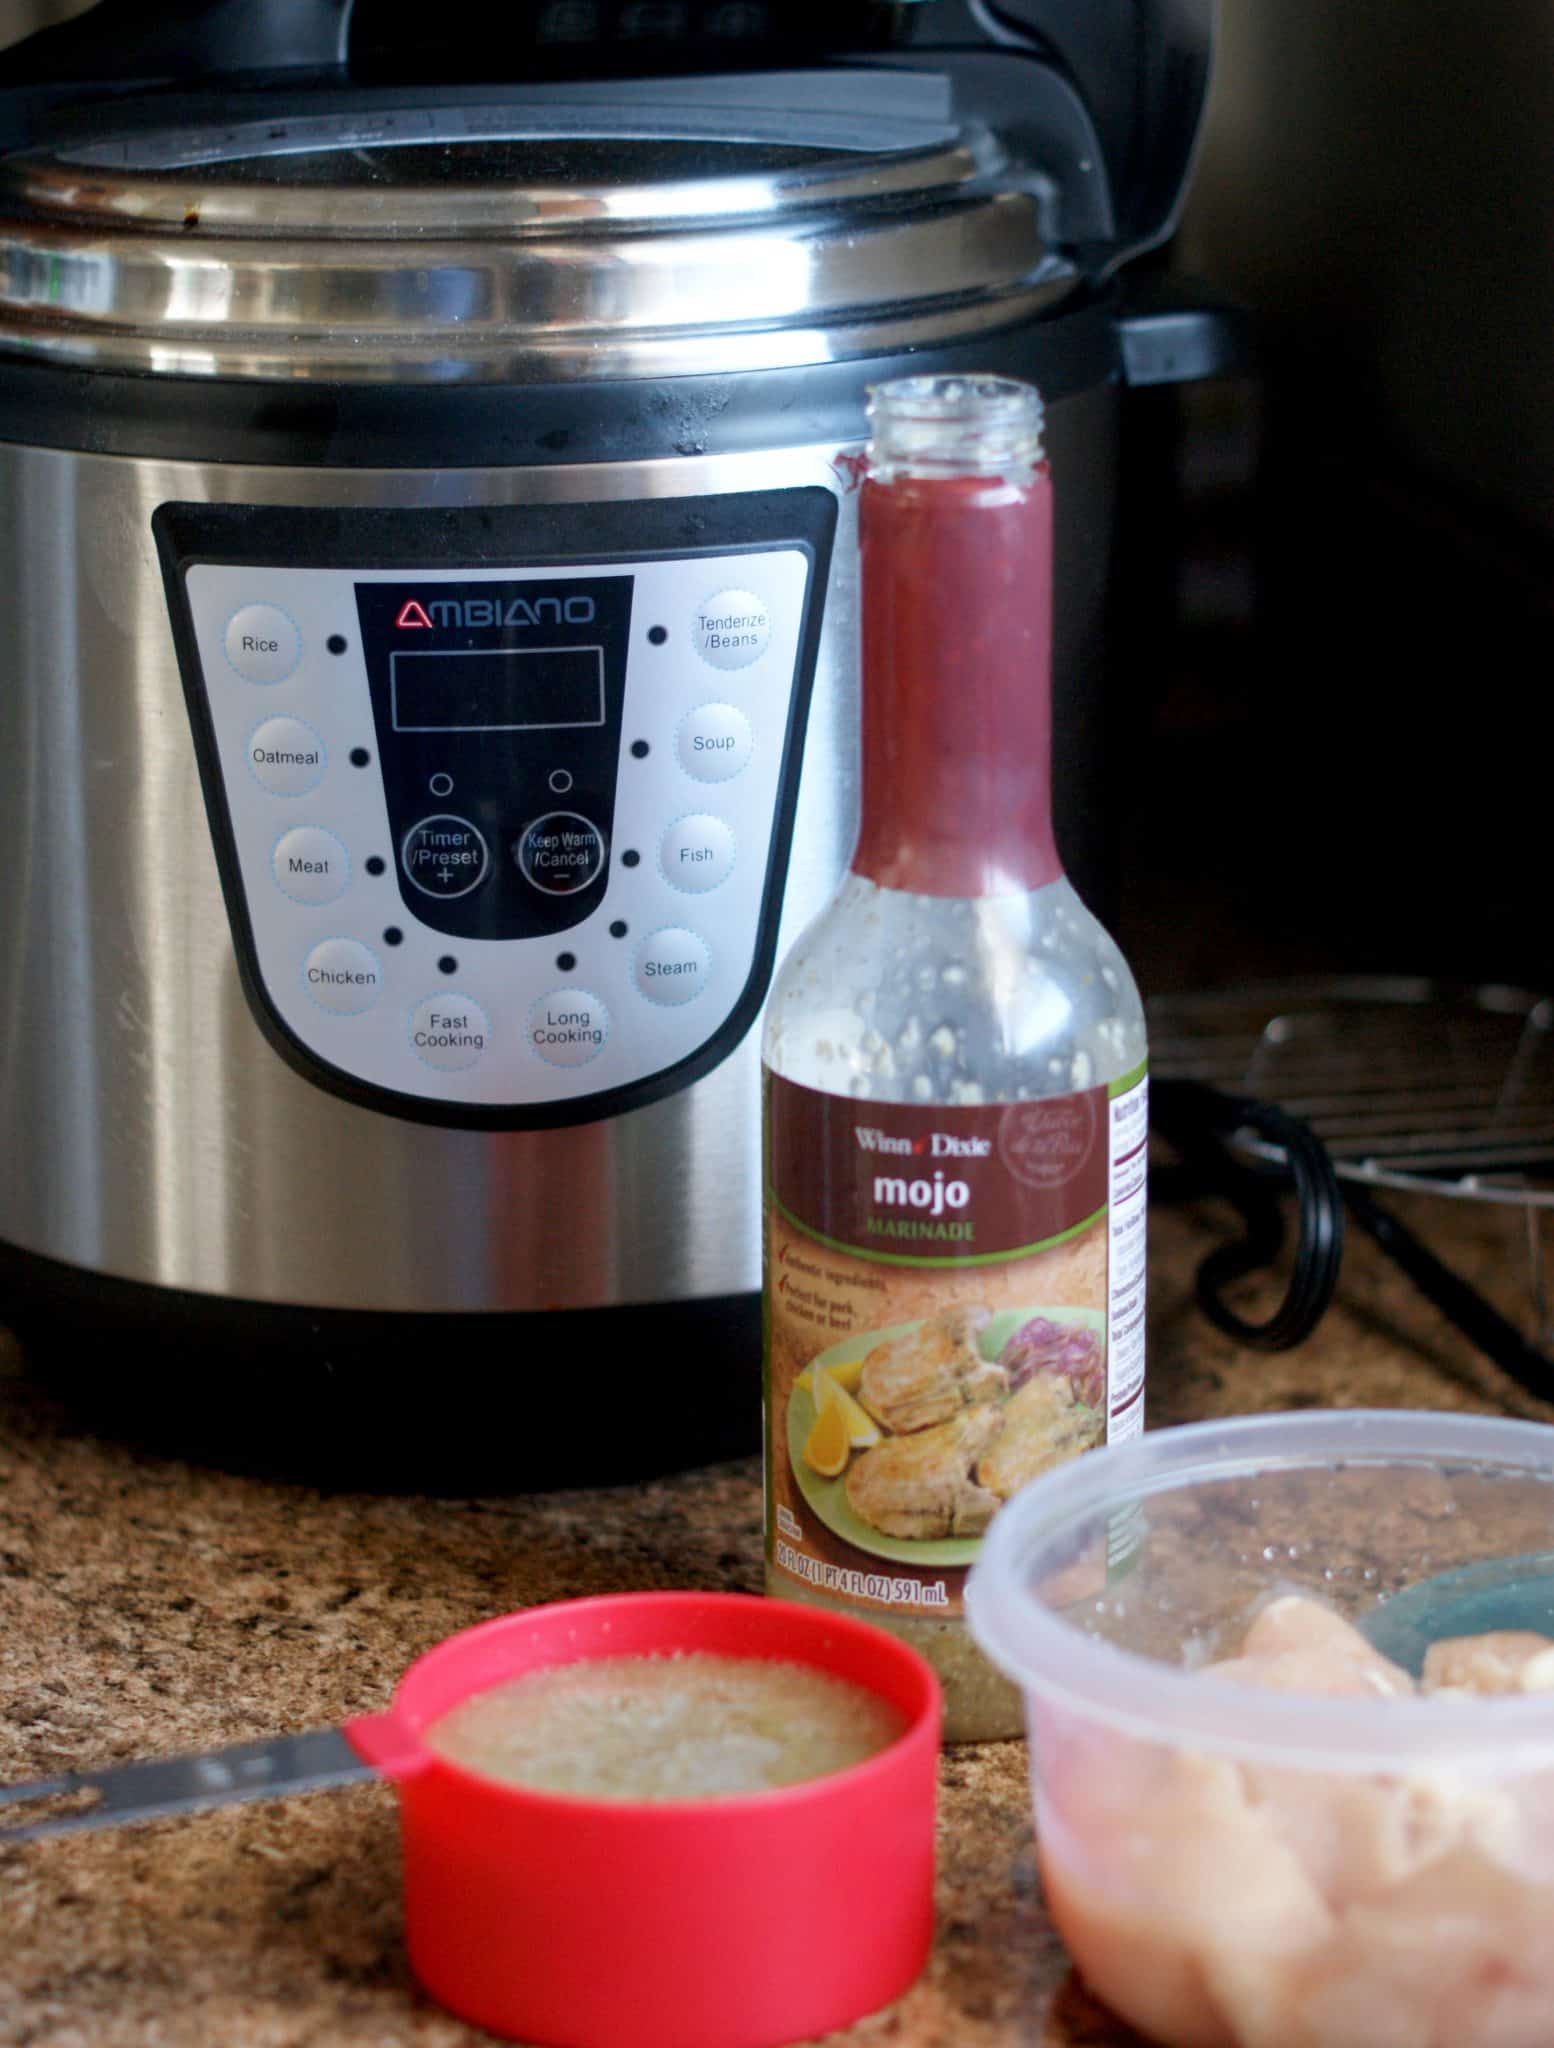 Mojo Instant Pot Chicken and Rice Recipe